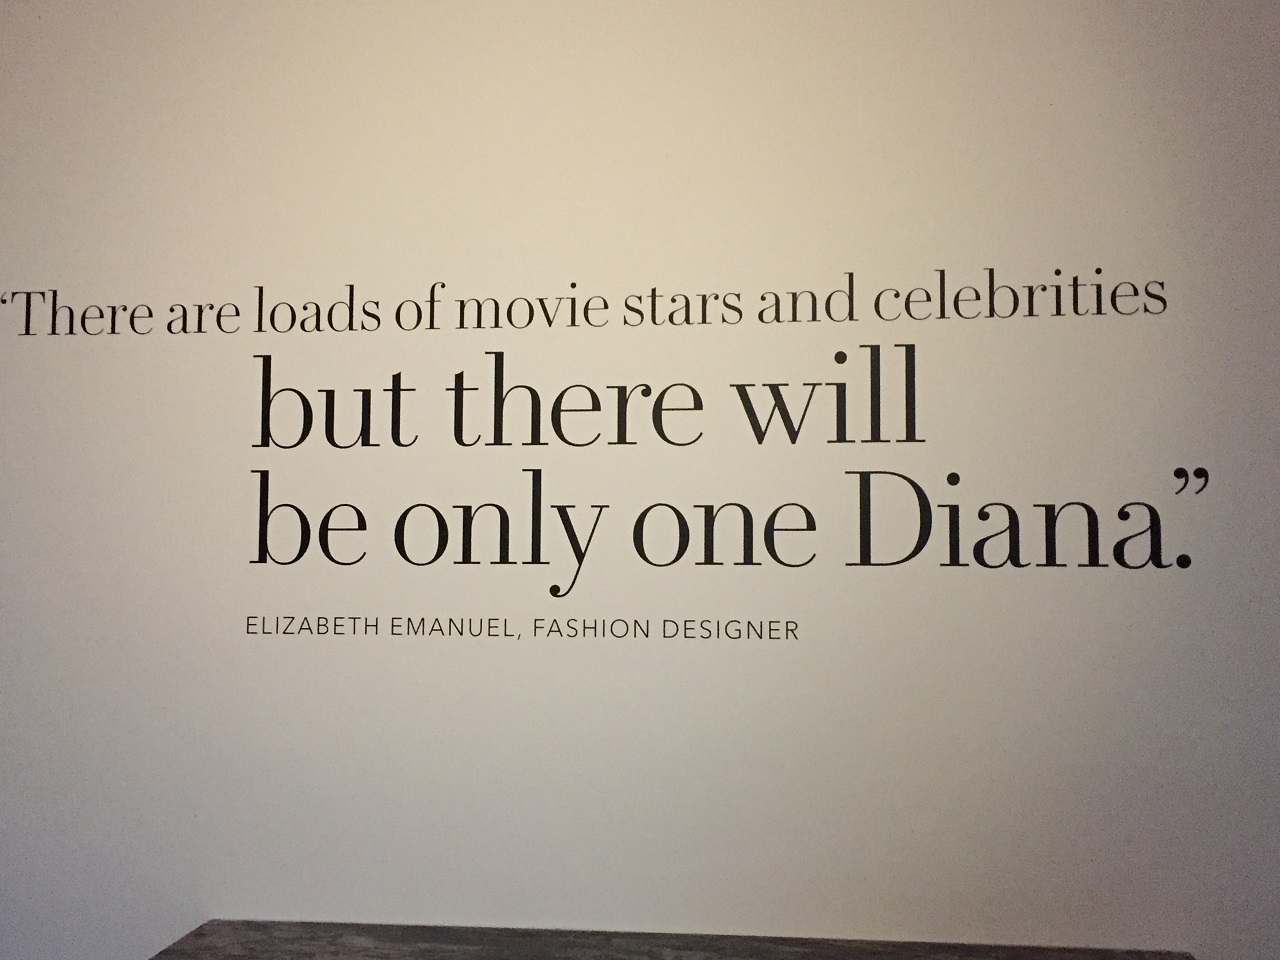 London Princess Diana quote